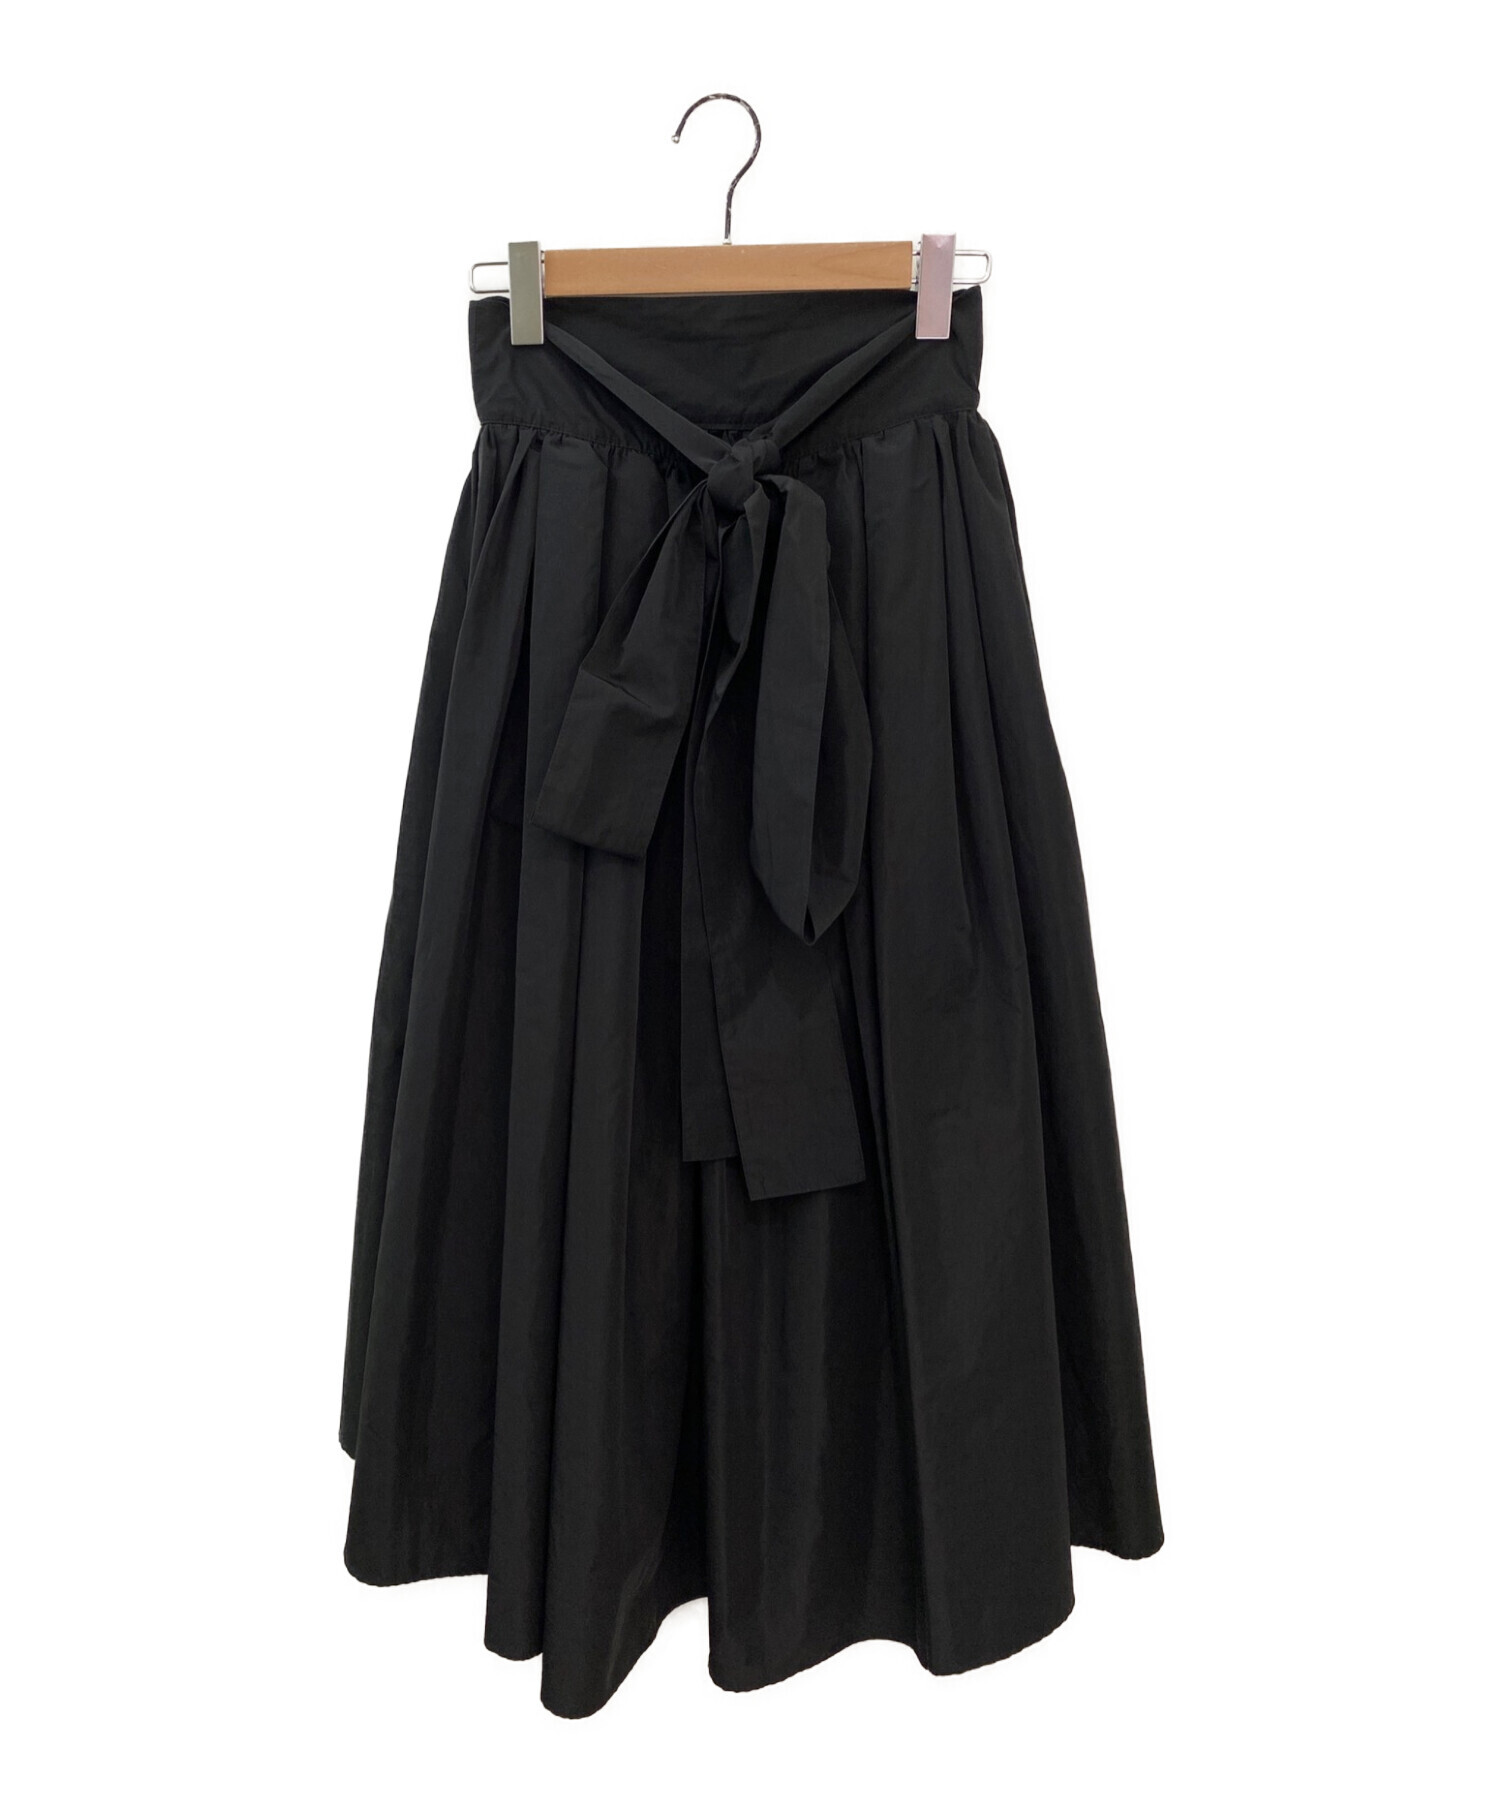 SHE TOKYO (シートーキョー) バックリボンナイロンスカート ブラック サイズ:36